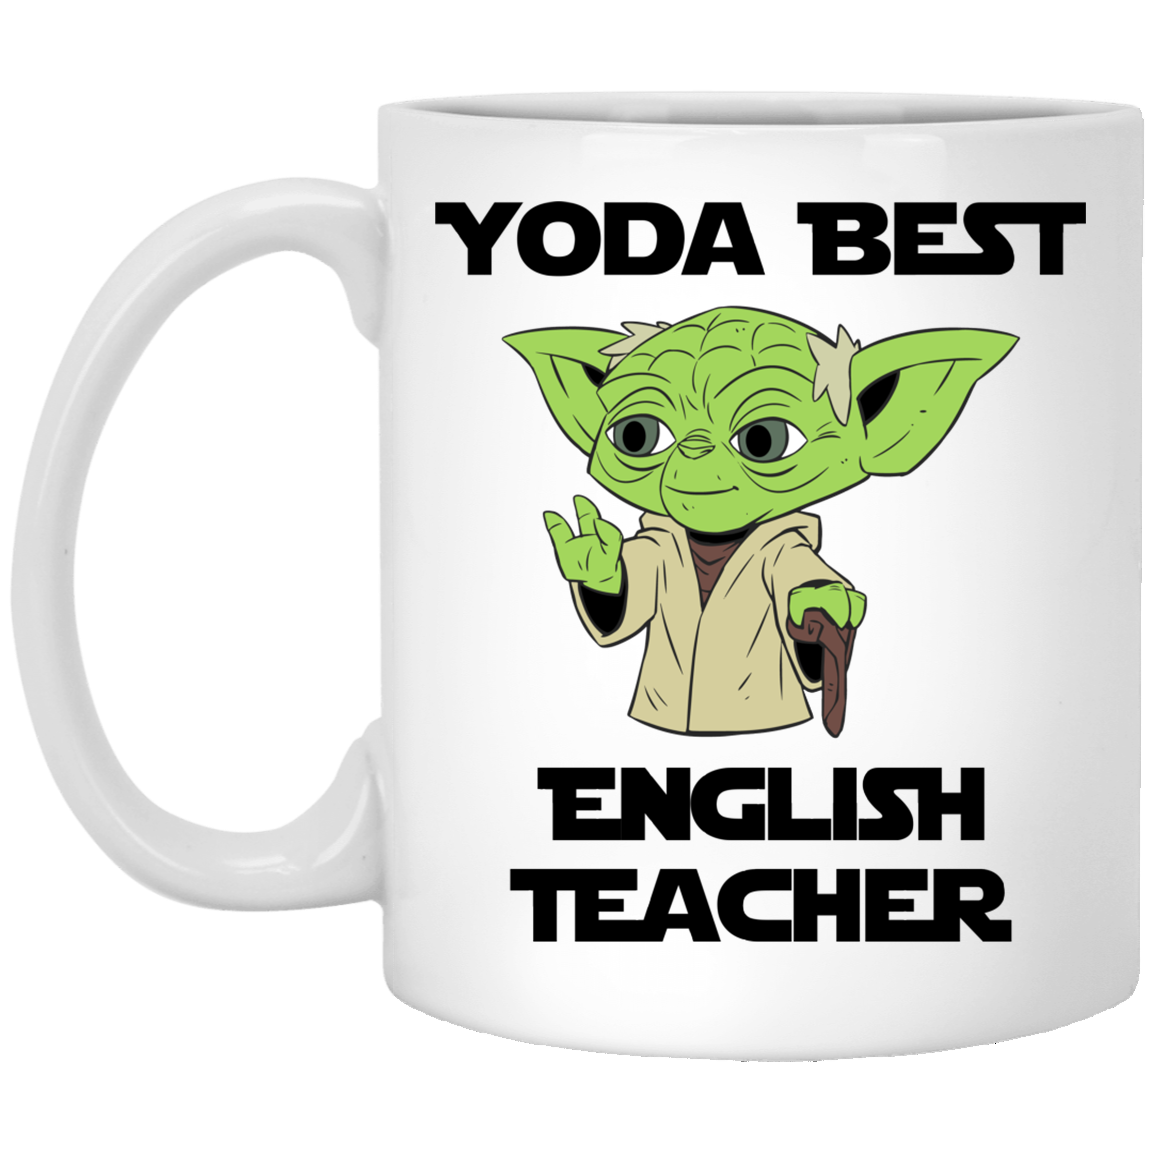 Yoda Best English Teacher